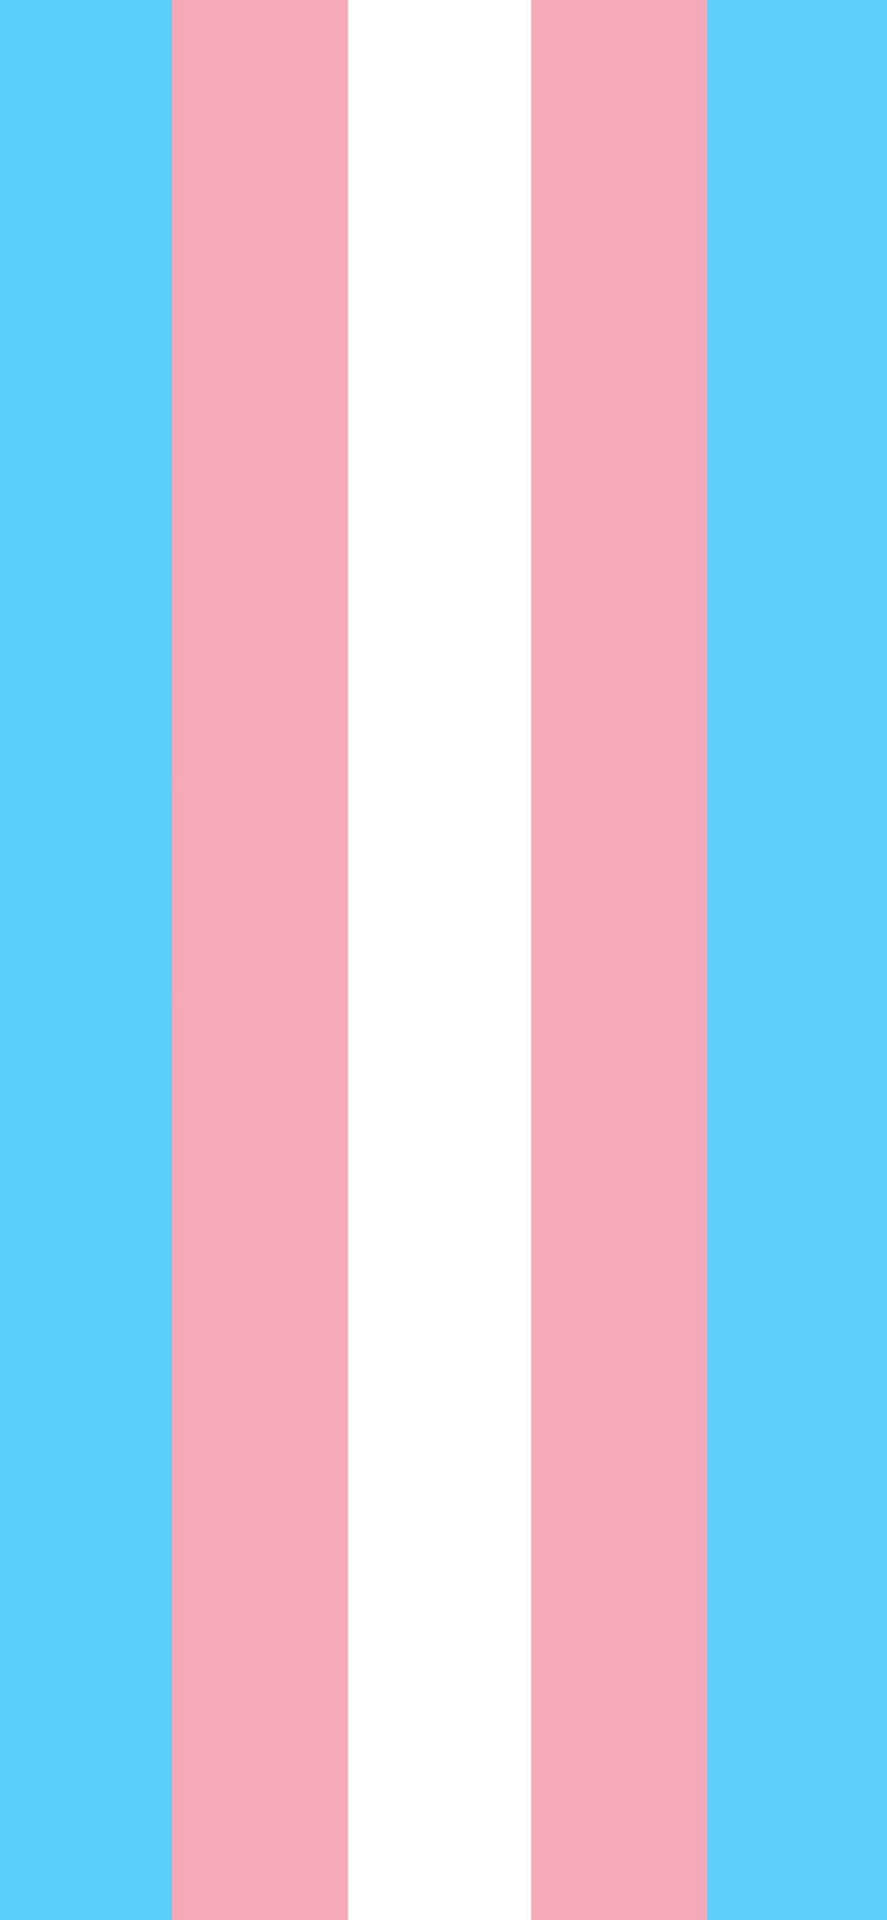 Transgenderstolz Feiern Wallpaper